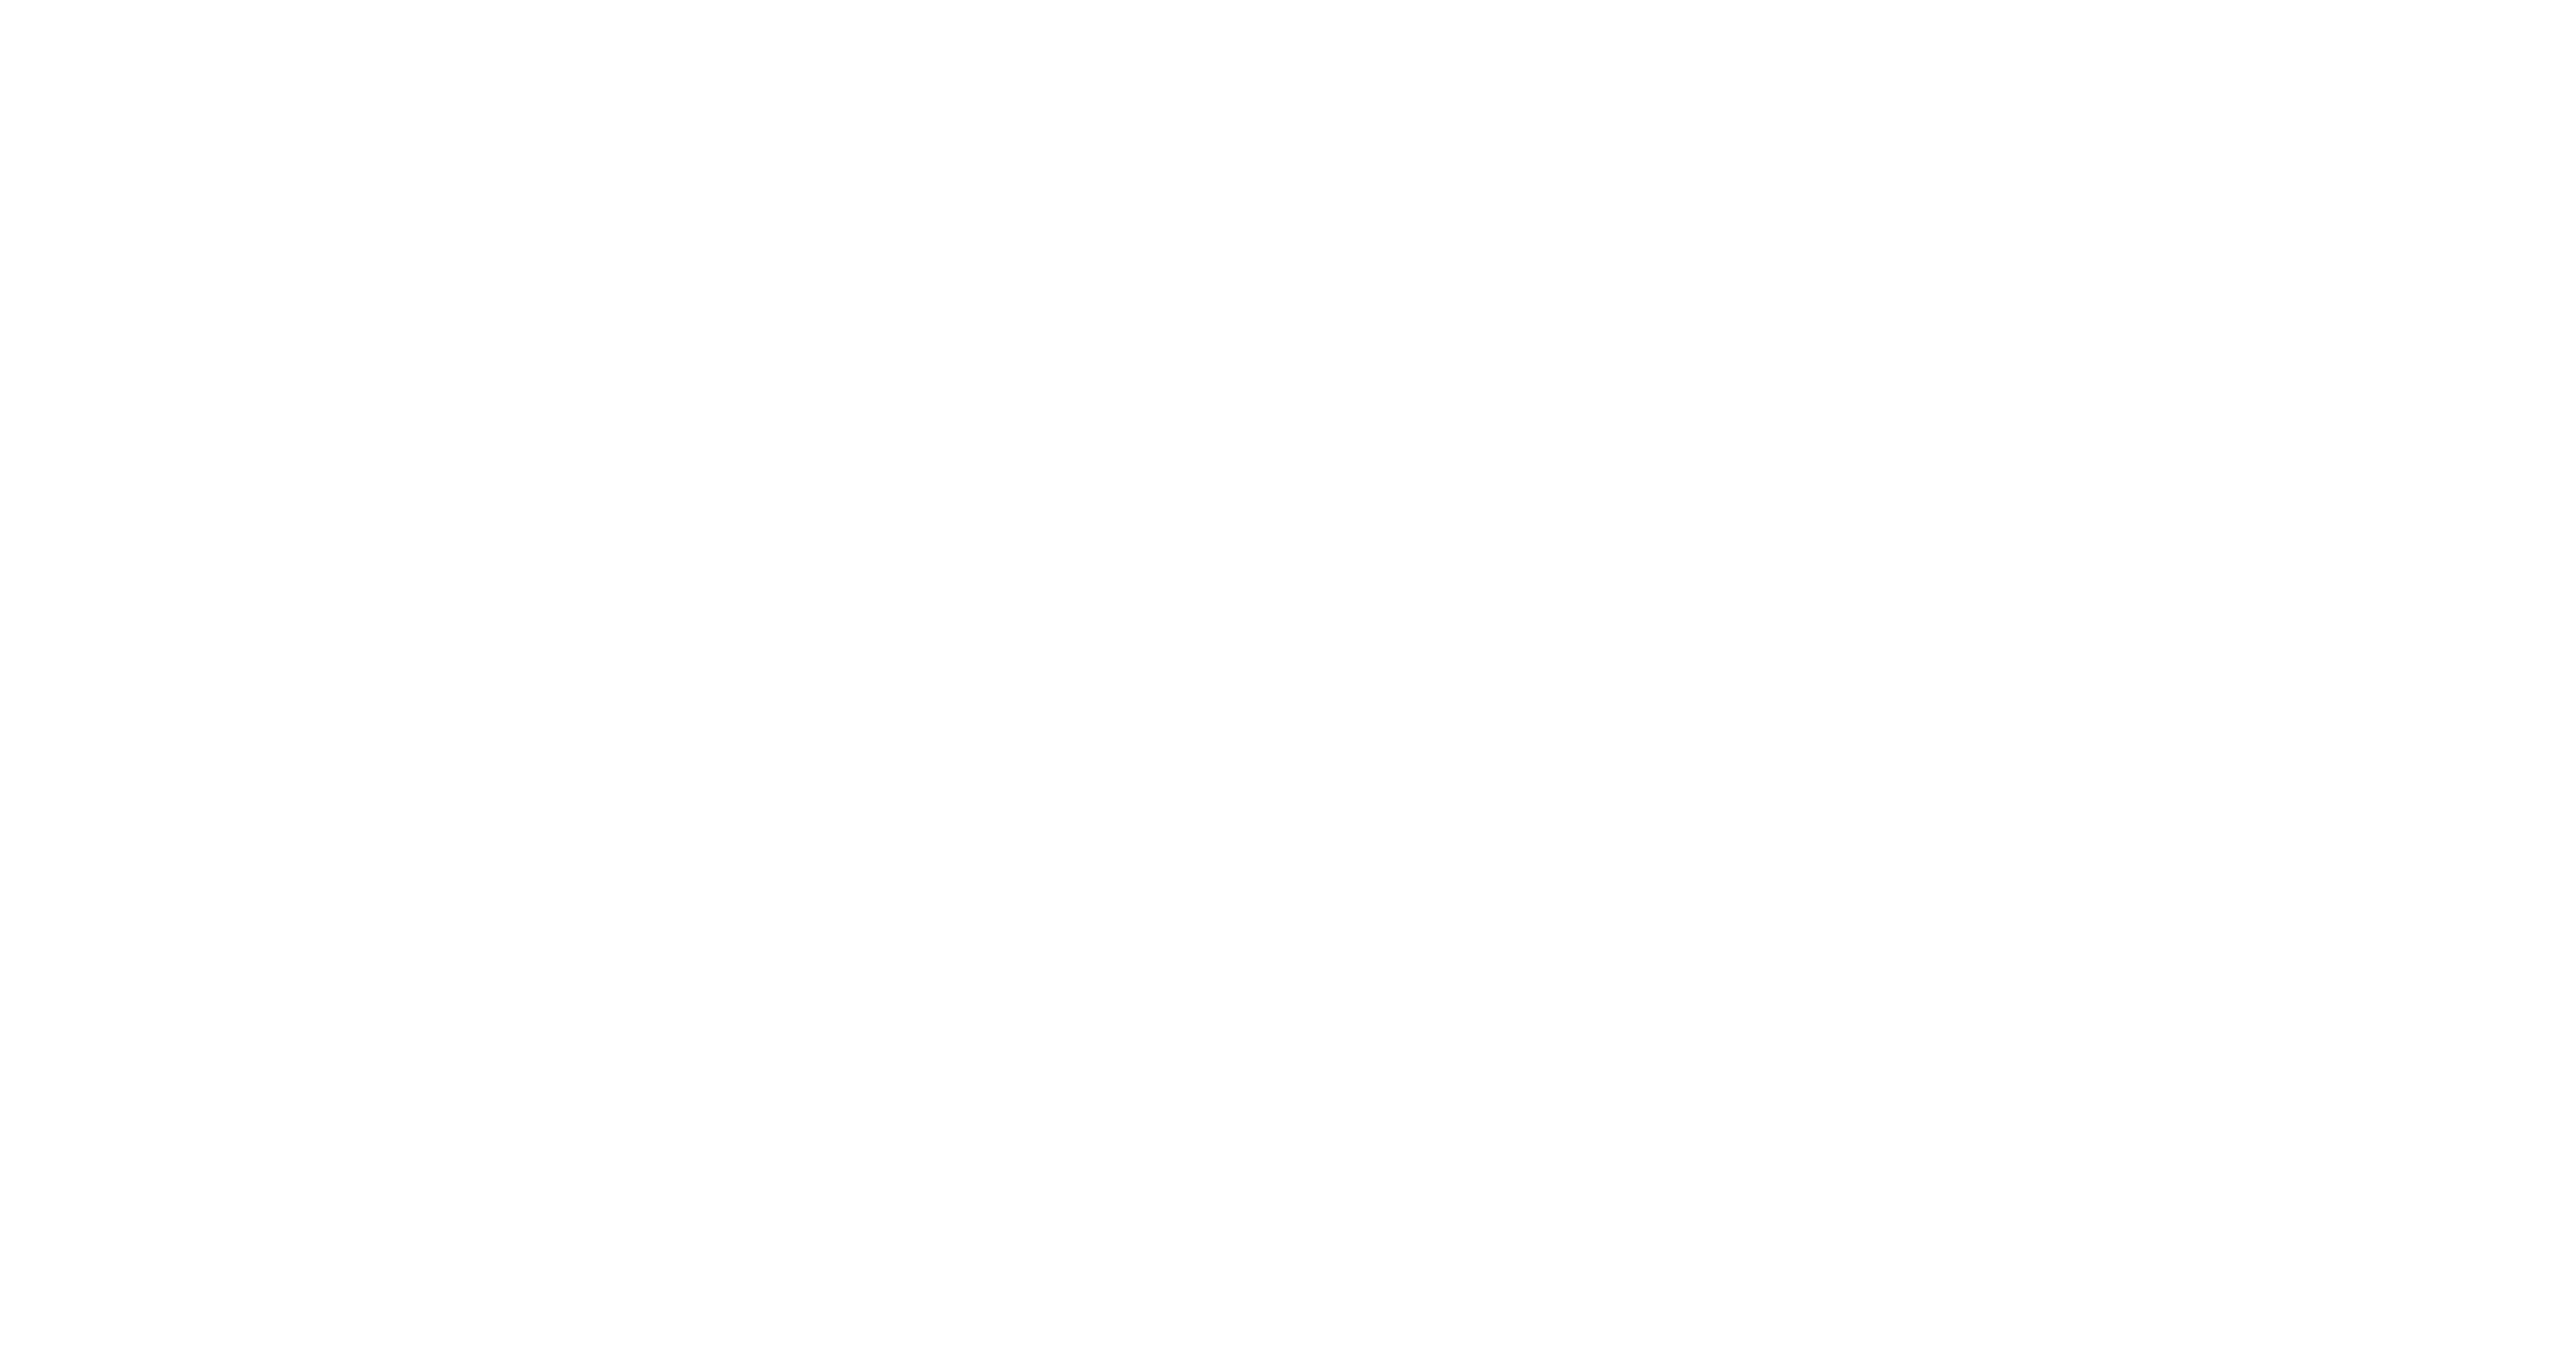 Europrovyl logo